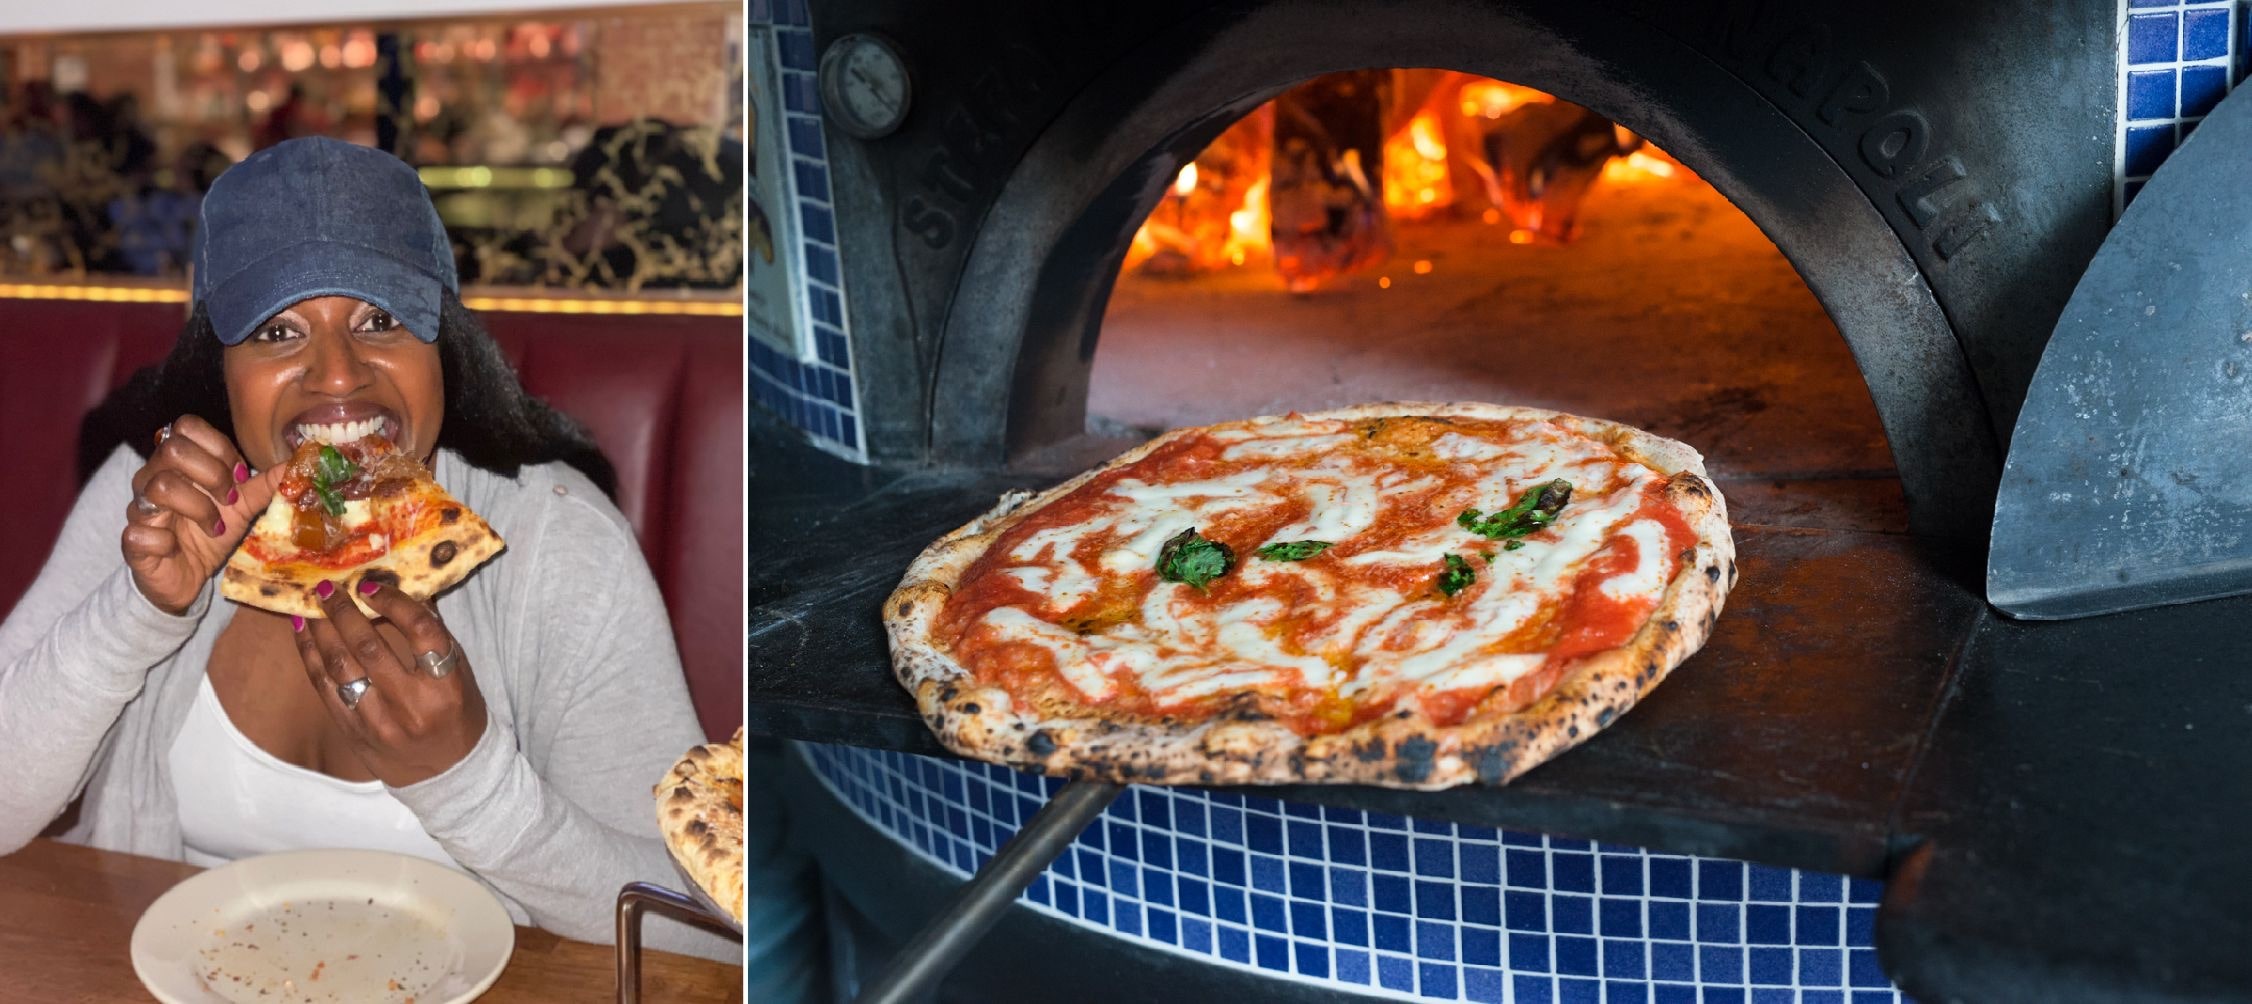 Find Your Joy at L.A.’s Best Pizzeria’s – Brooklyn Ave. Pizza Co. & L’Antica Pizzeria da Michele